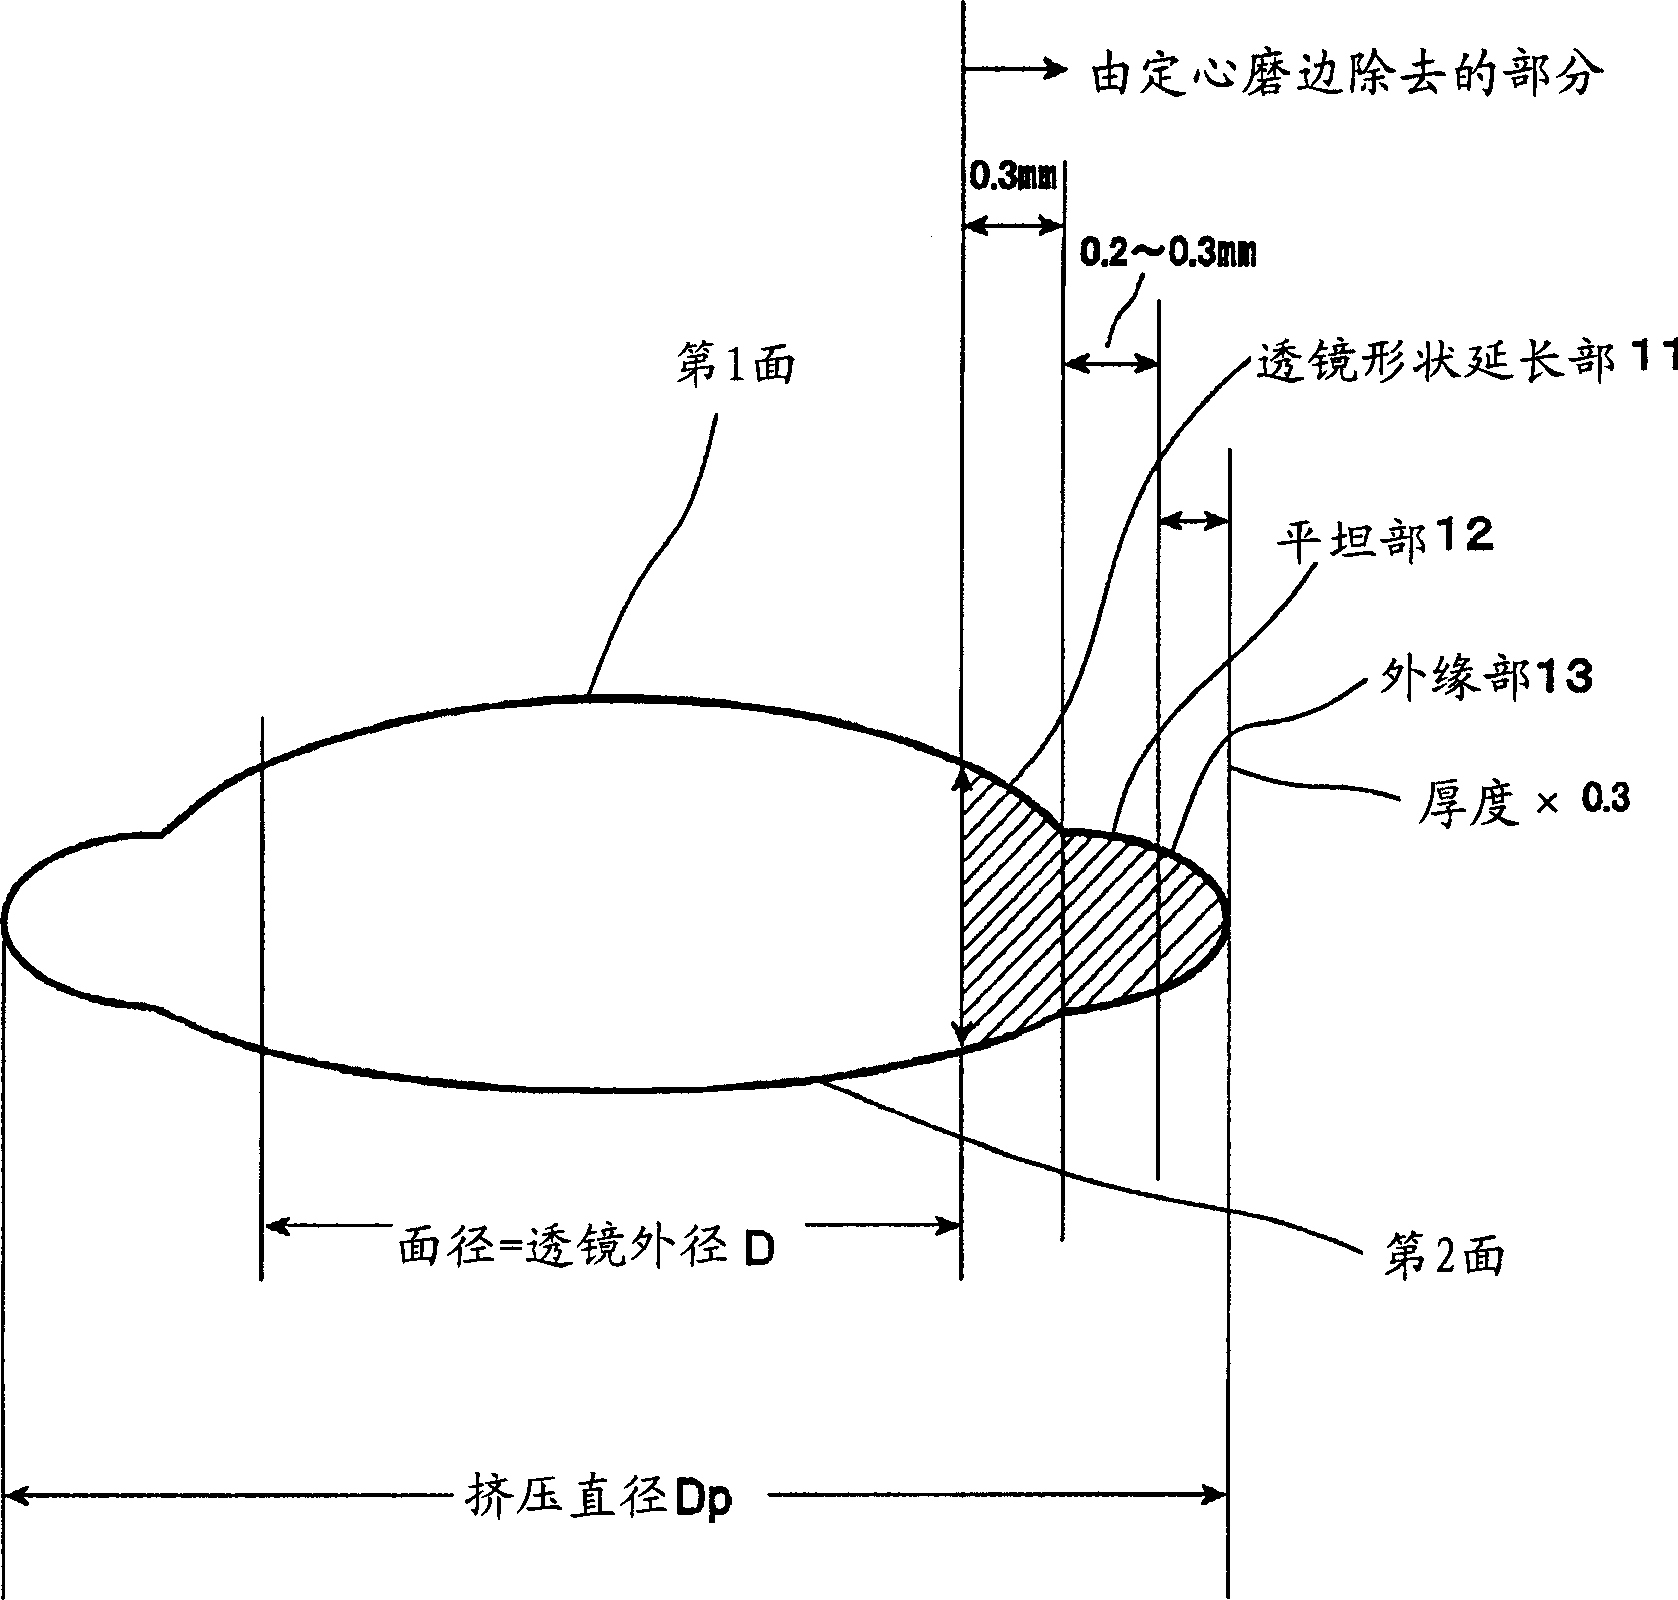 Method for mfg optical elements